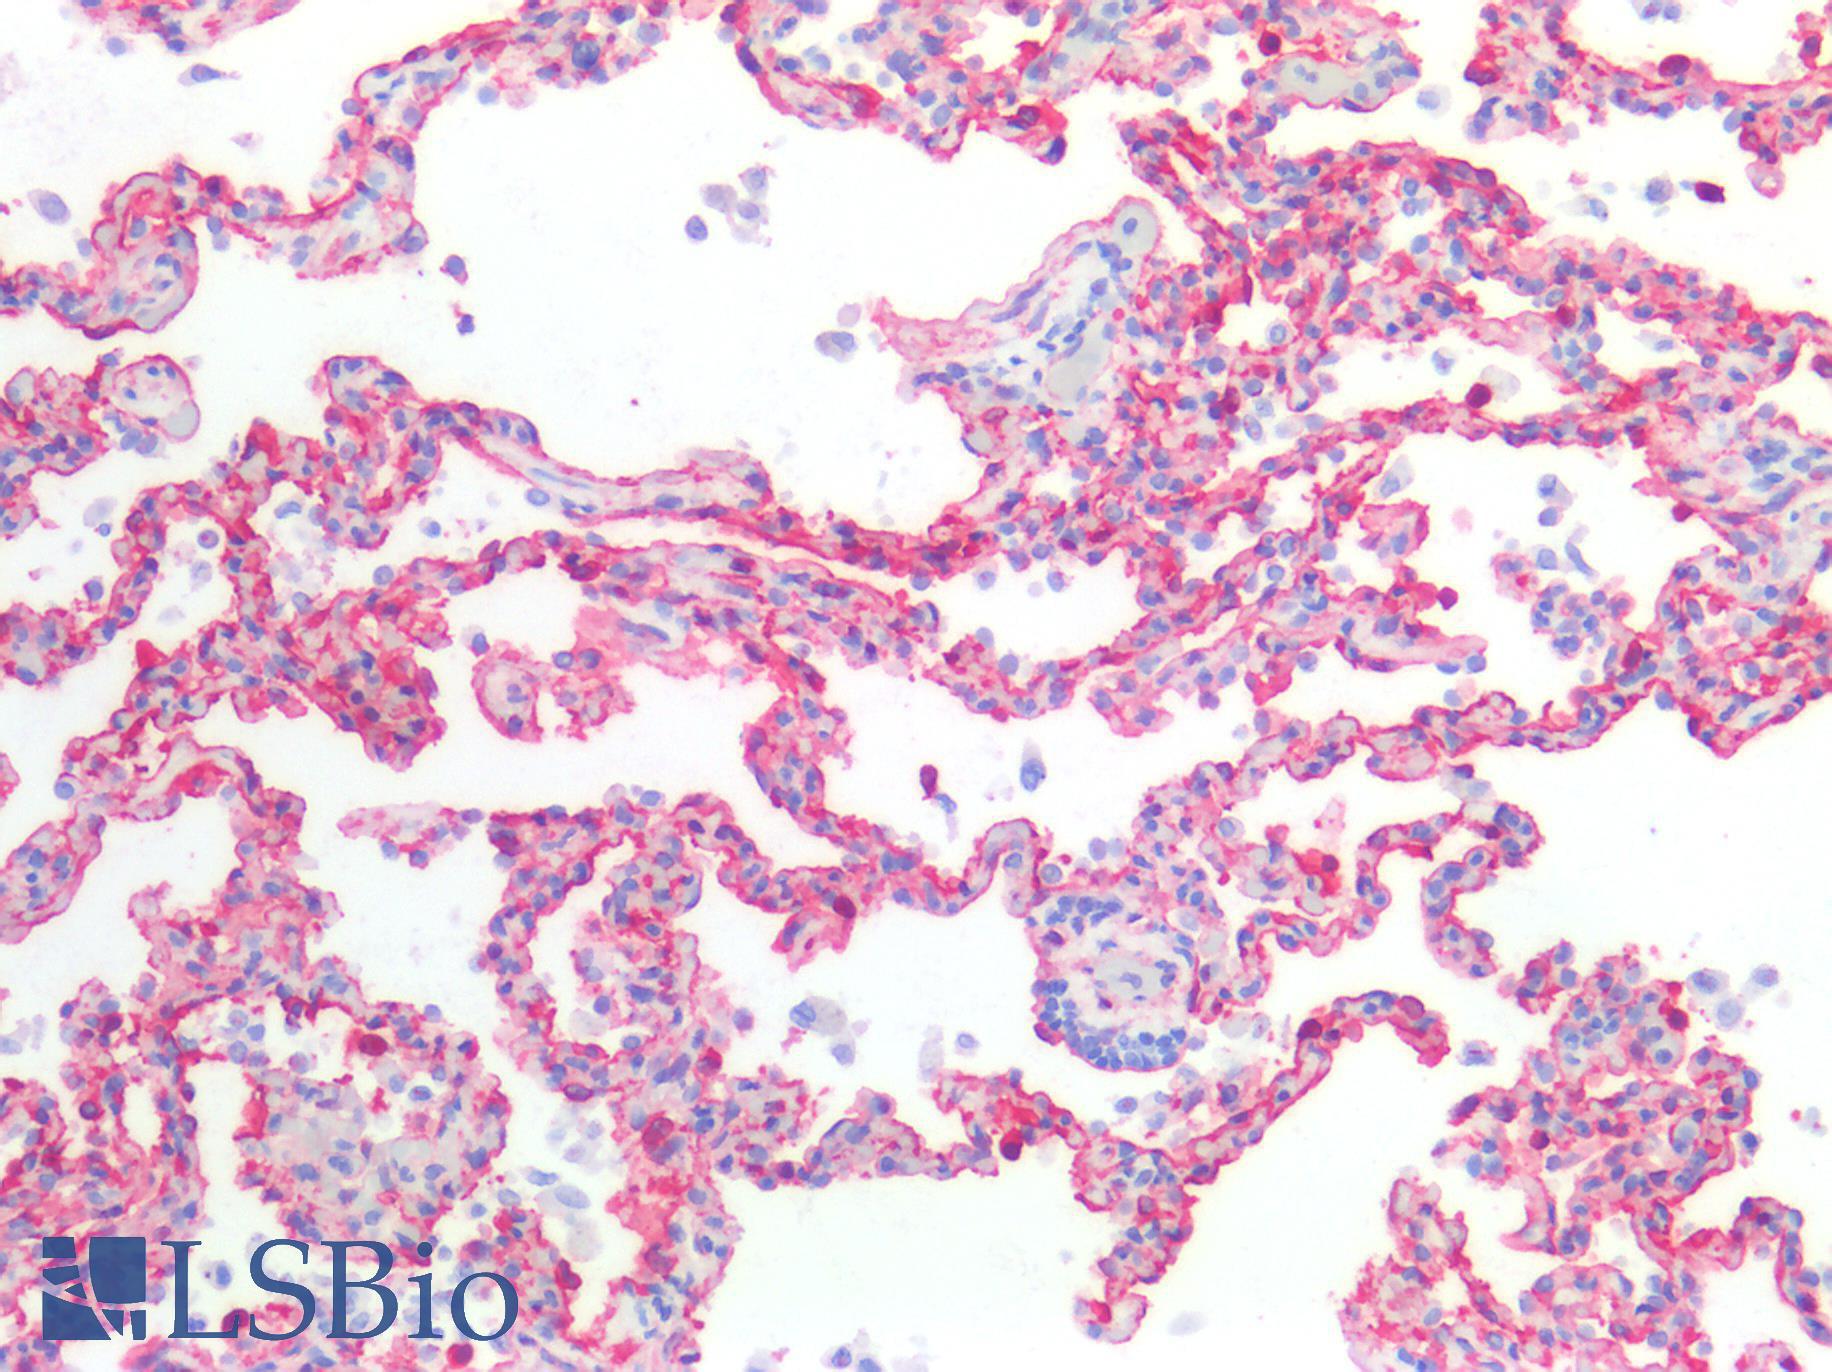 CAV1 / Caveolin 1 Antibody - Human Lung: Formalin-Fixed, Paraffin-Embedded (FFPE)